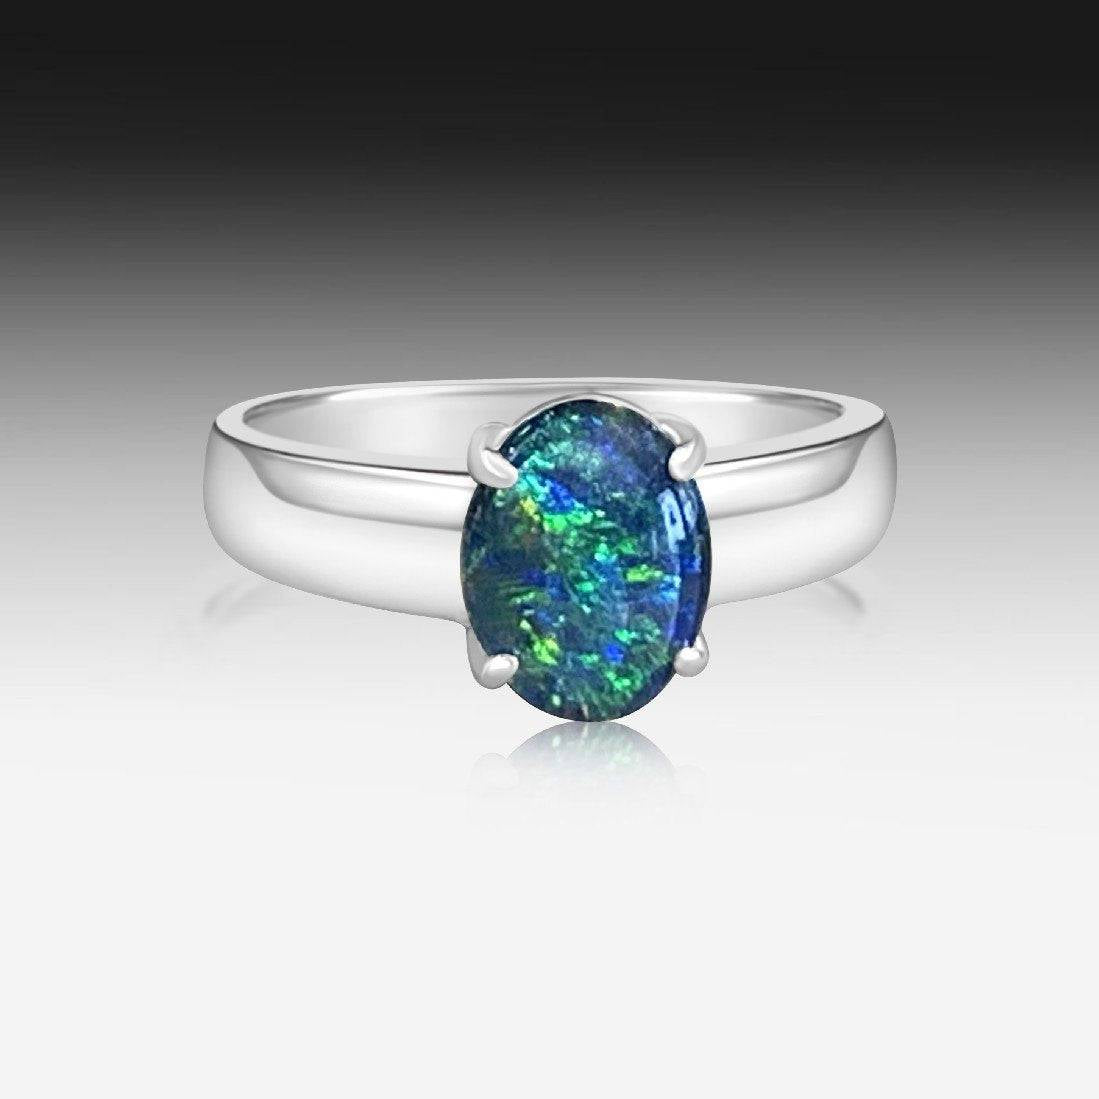 Sterling Silver solitaire Opal triplet ring - Masterpiece Jewellery Opal & Gems Sydney Australia | Online Shop